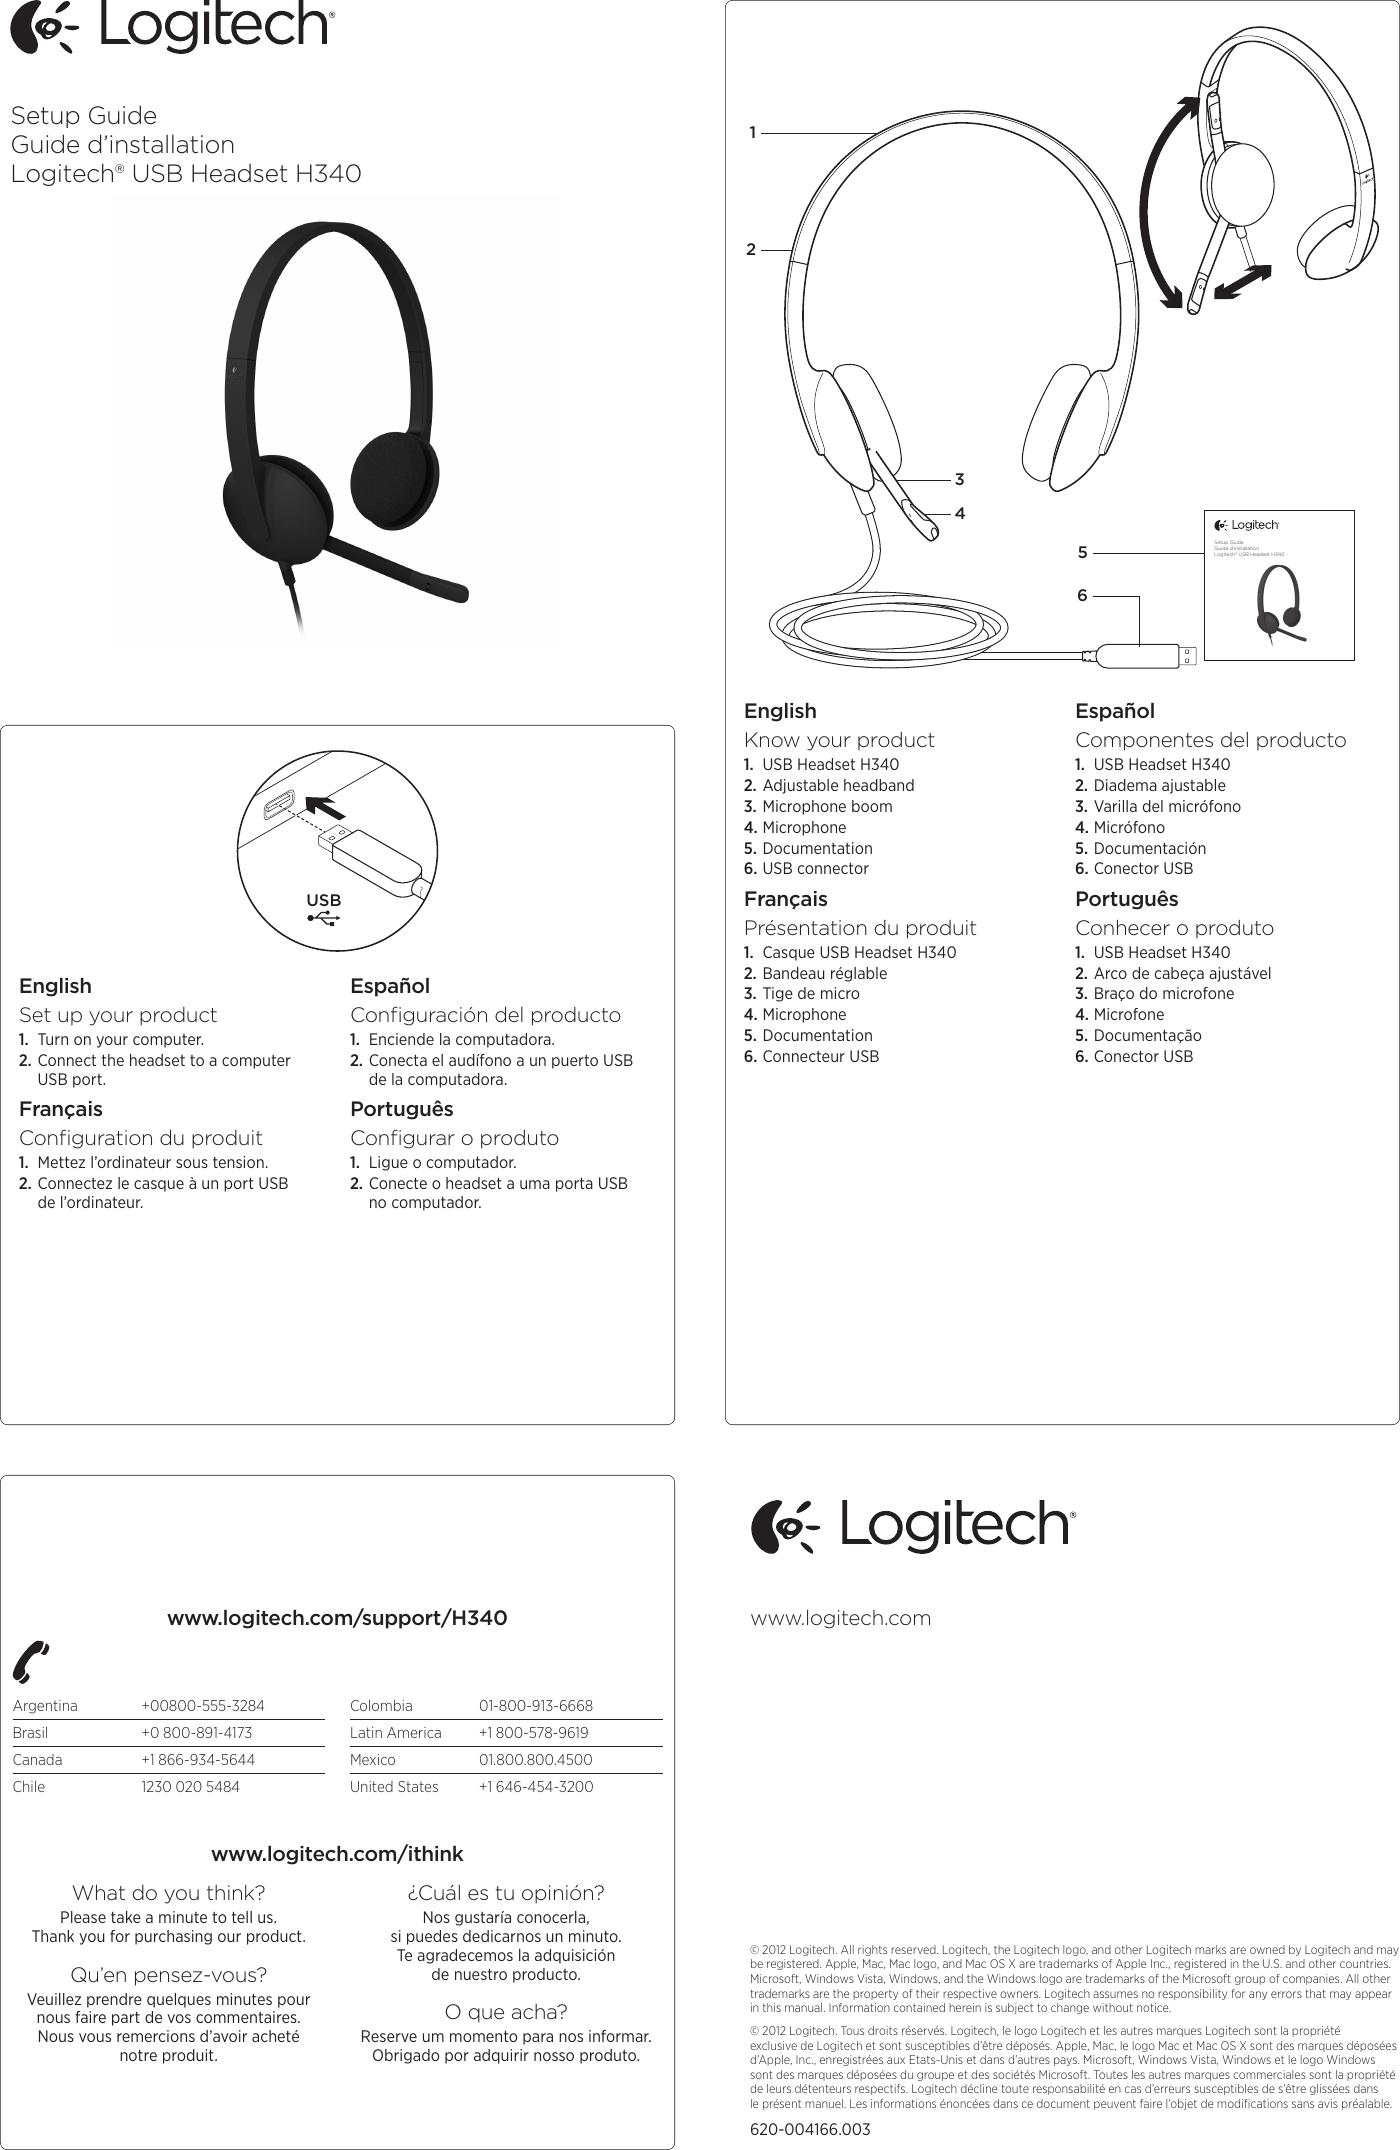 Page 1 of 2 - Logitech Logitech-A-00044-Quick-Start-Guide